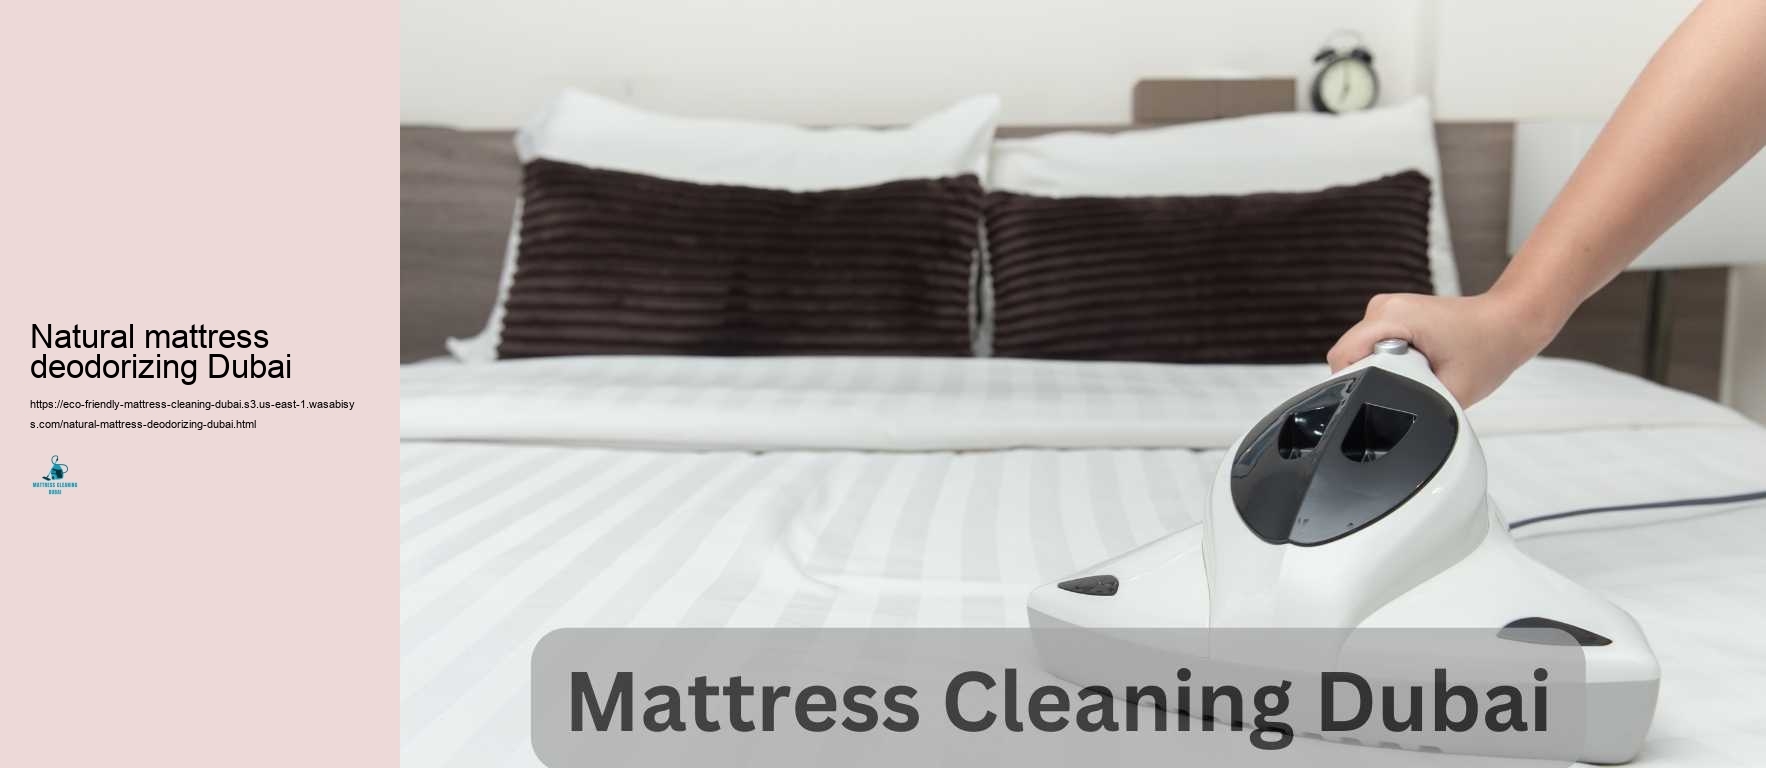 Natural mattress deodorizing Dubai